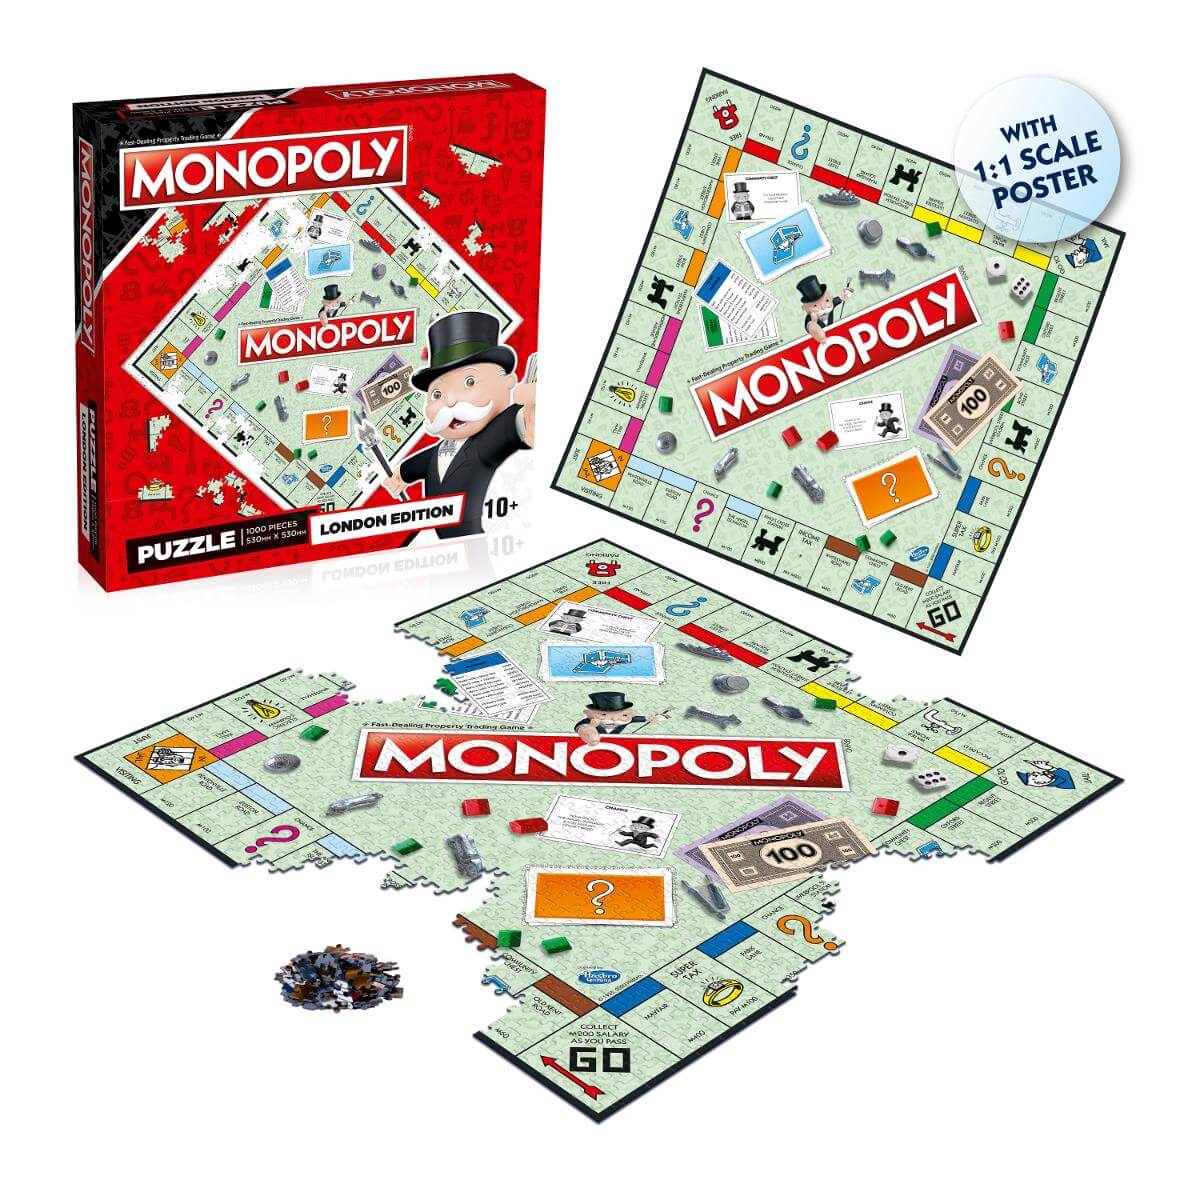 London Monopoly 1000 Piece Jigsaw Puzzle